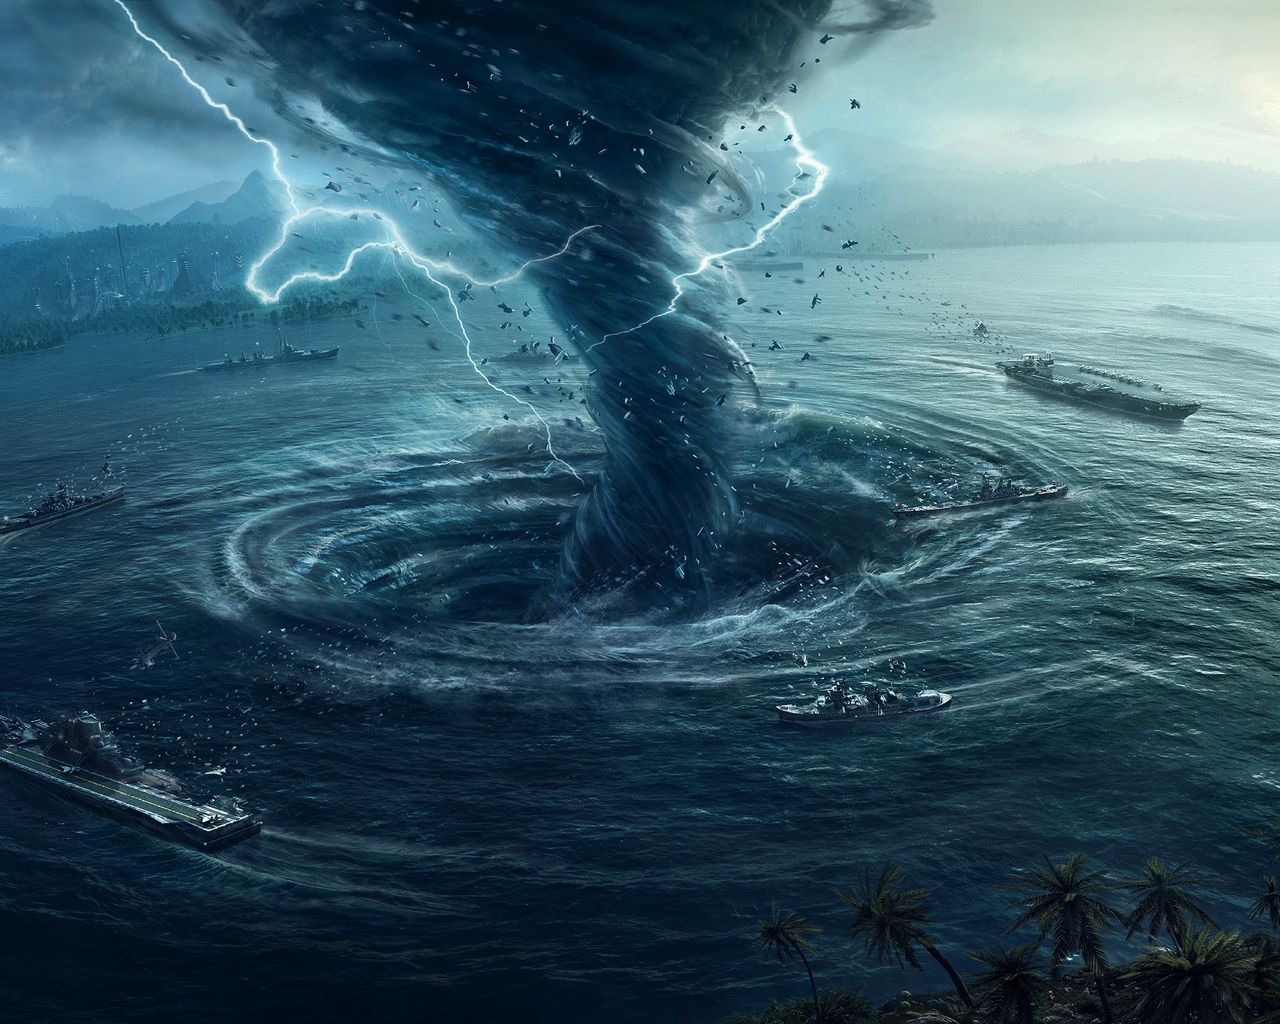 Image: Storm, tornado, funnel, lightning, ships, palm trees, water, sea, storm